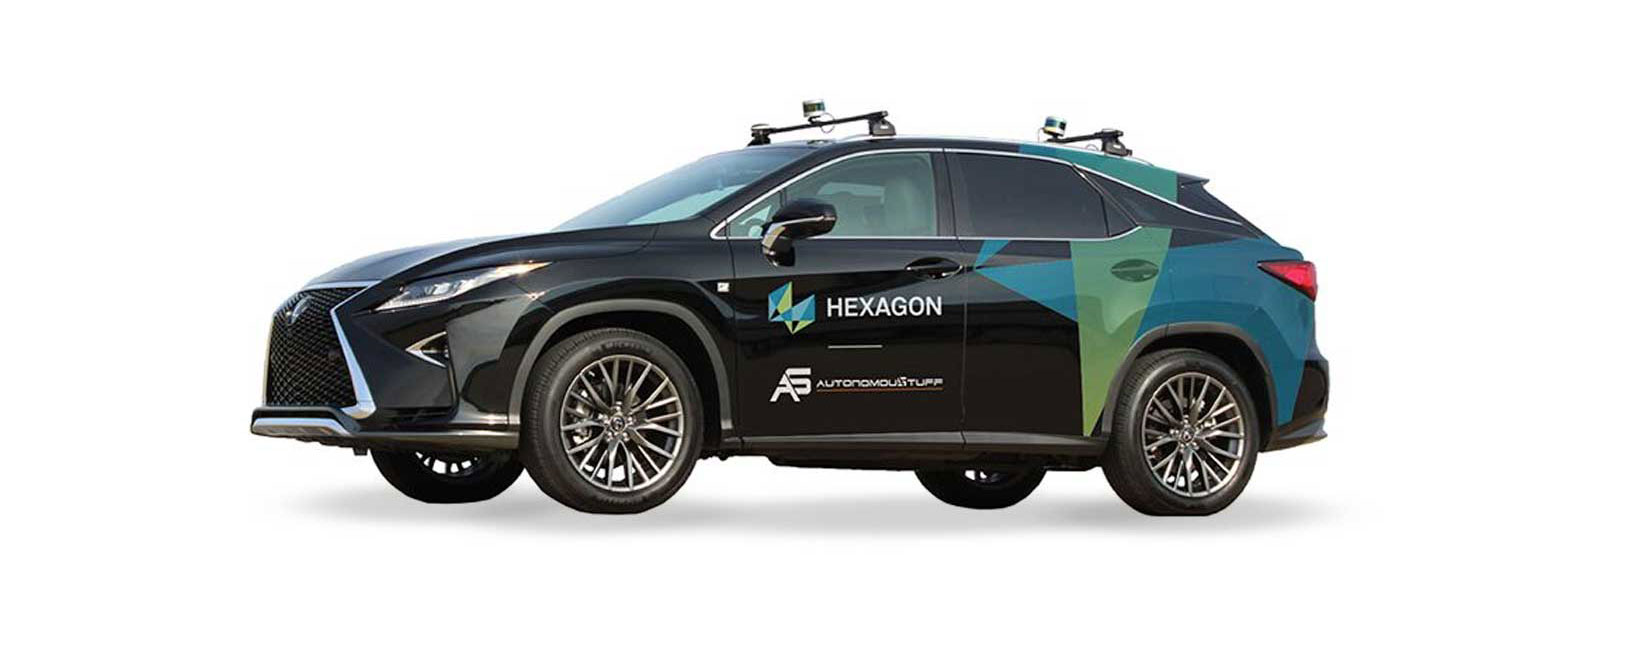 Image of Hexagon-branded vehicle with autonomous capabilities